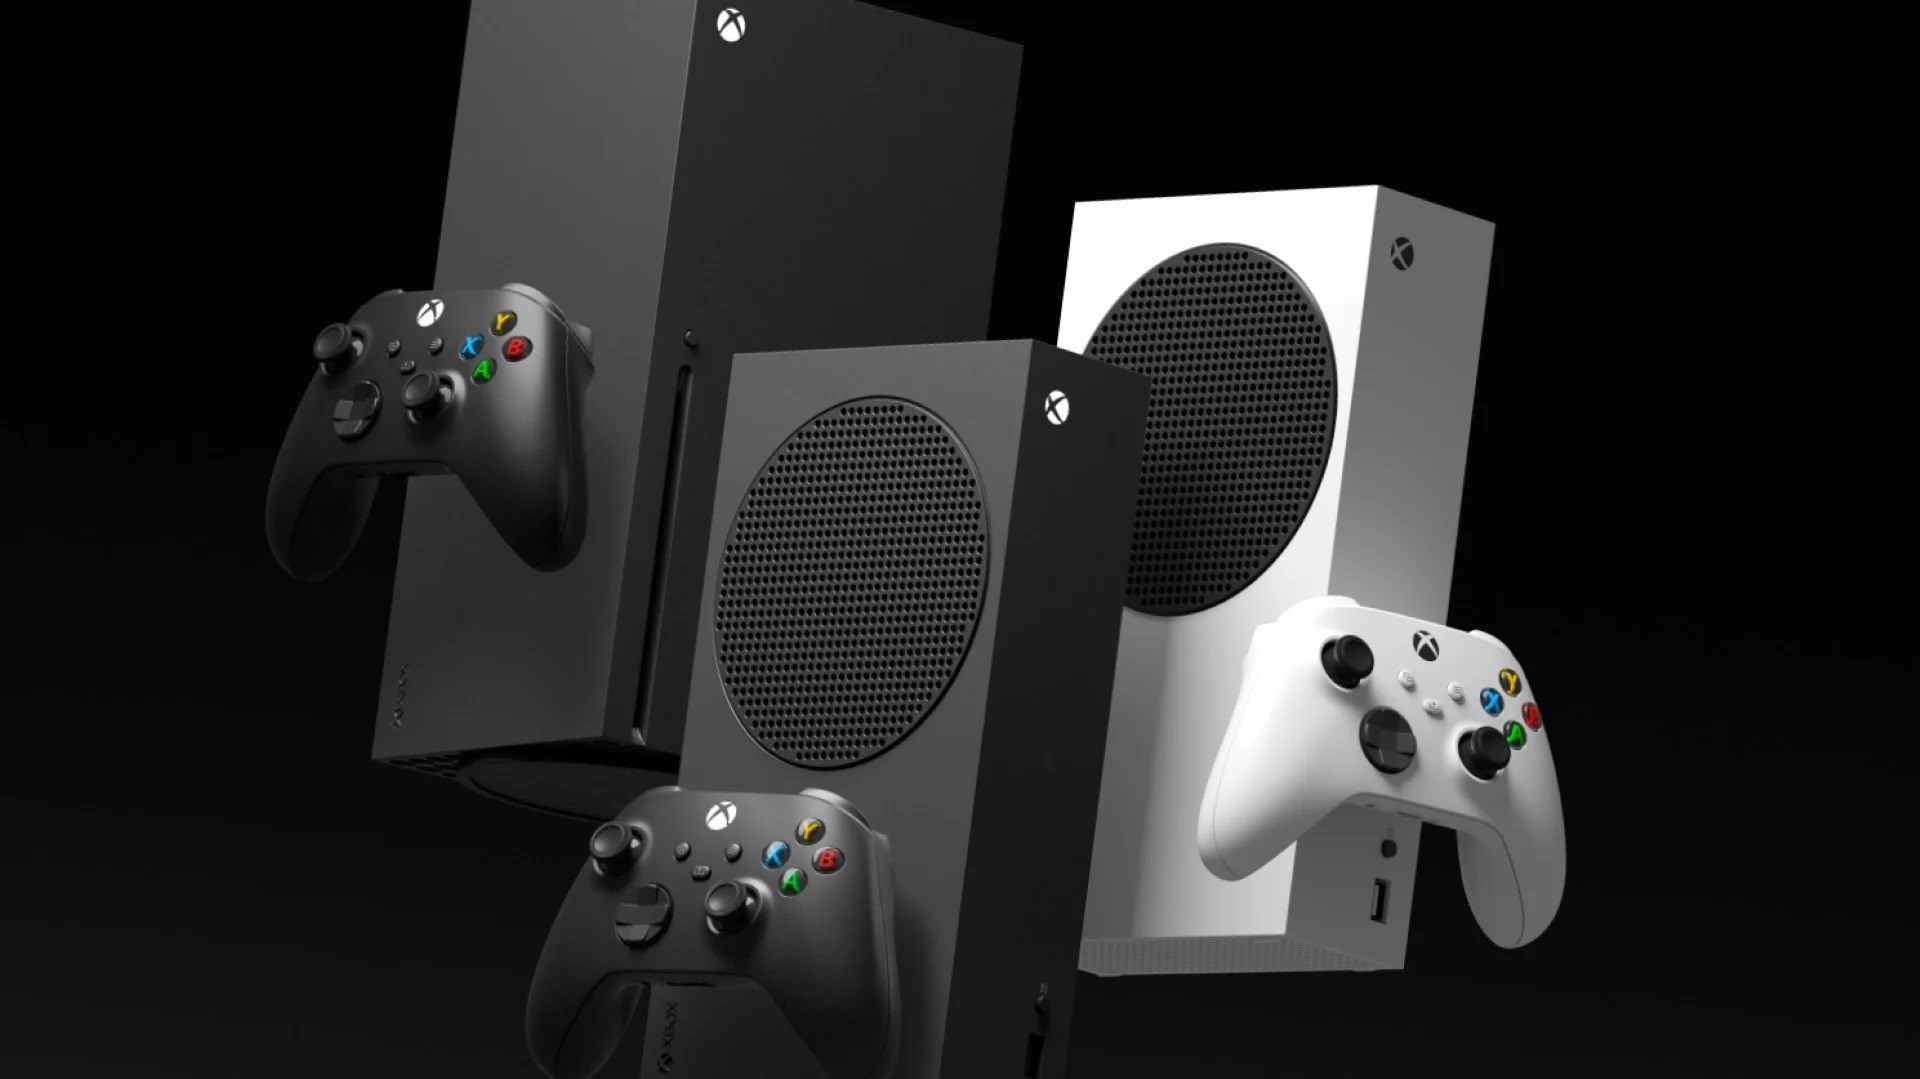 Yeni Nesil Xbox Konsolu Ortaya Cikti Iste Cikis Tarihi Ve Detayl168925 0